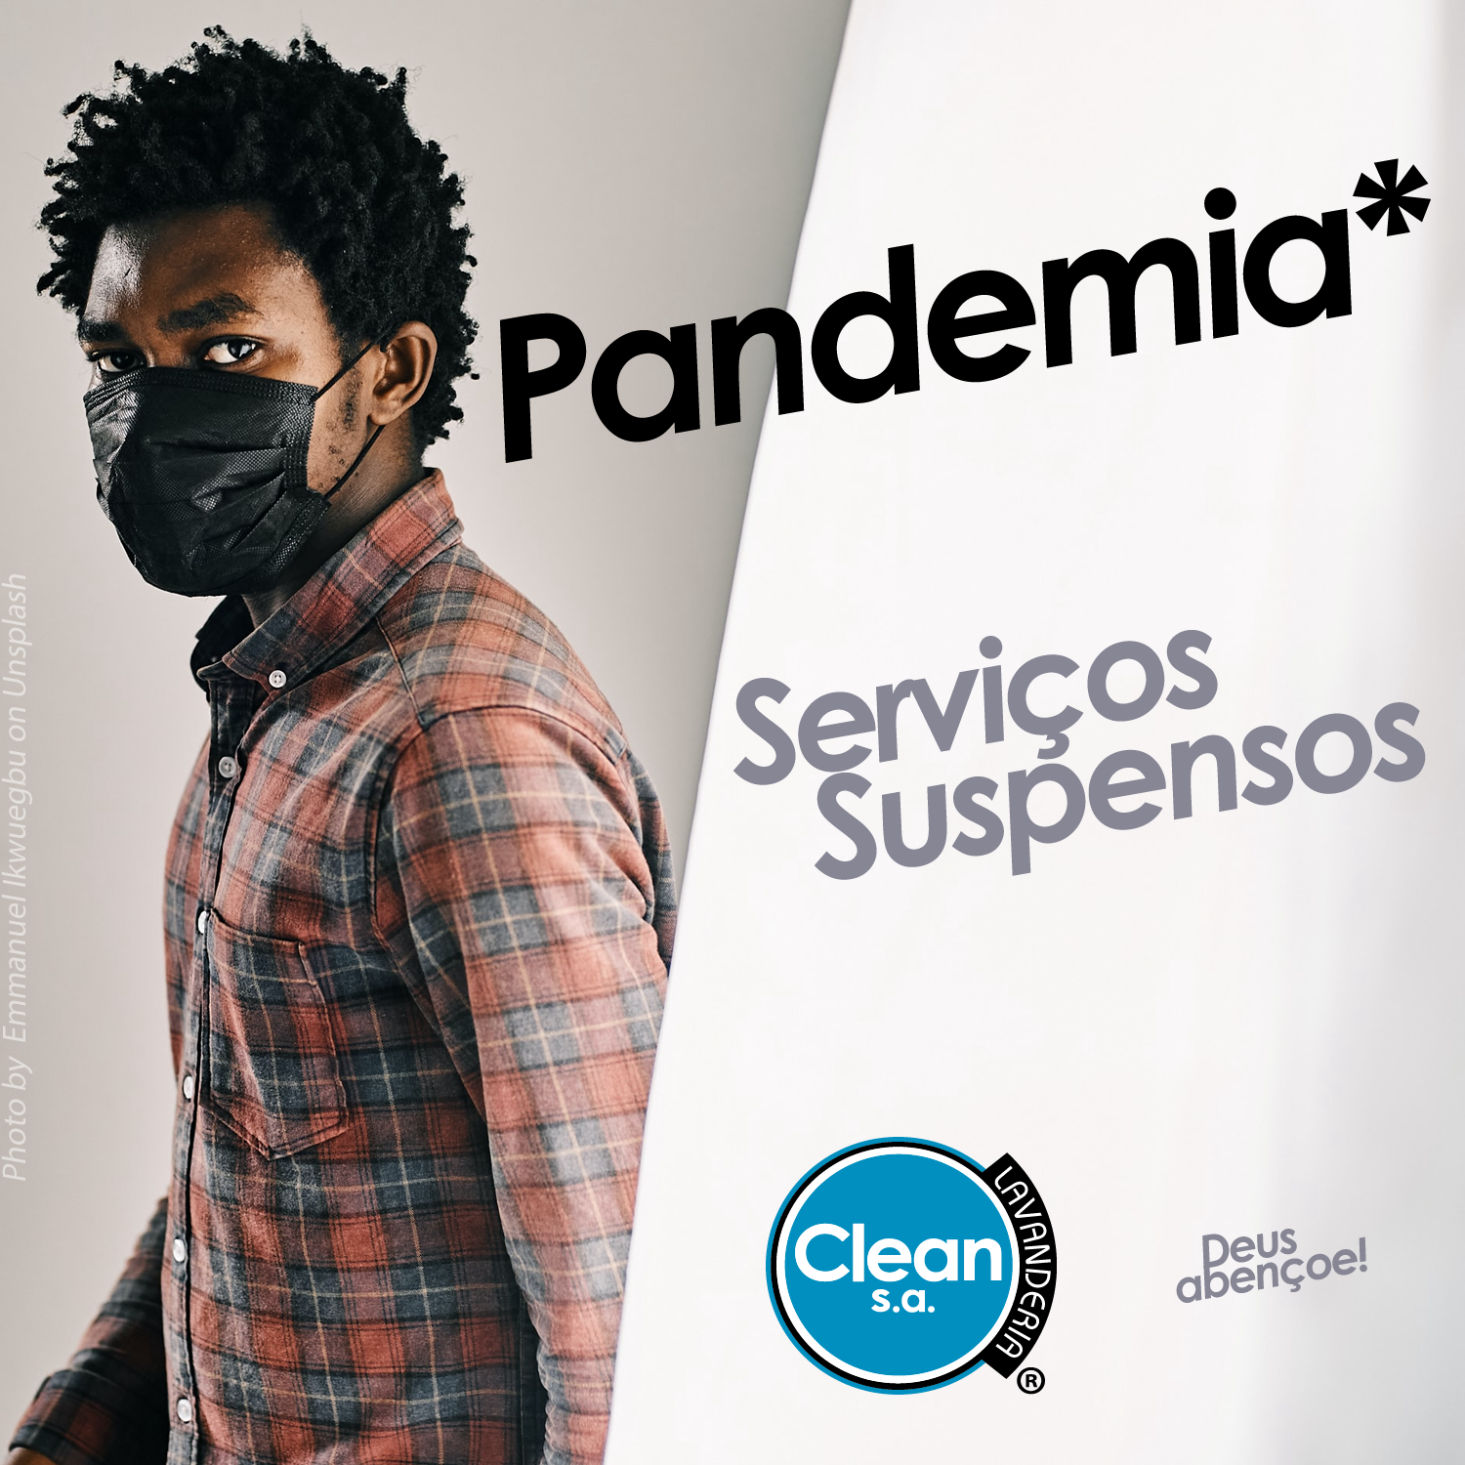 Pandemia - Serviços Suspensos